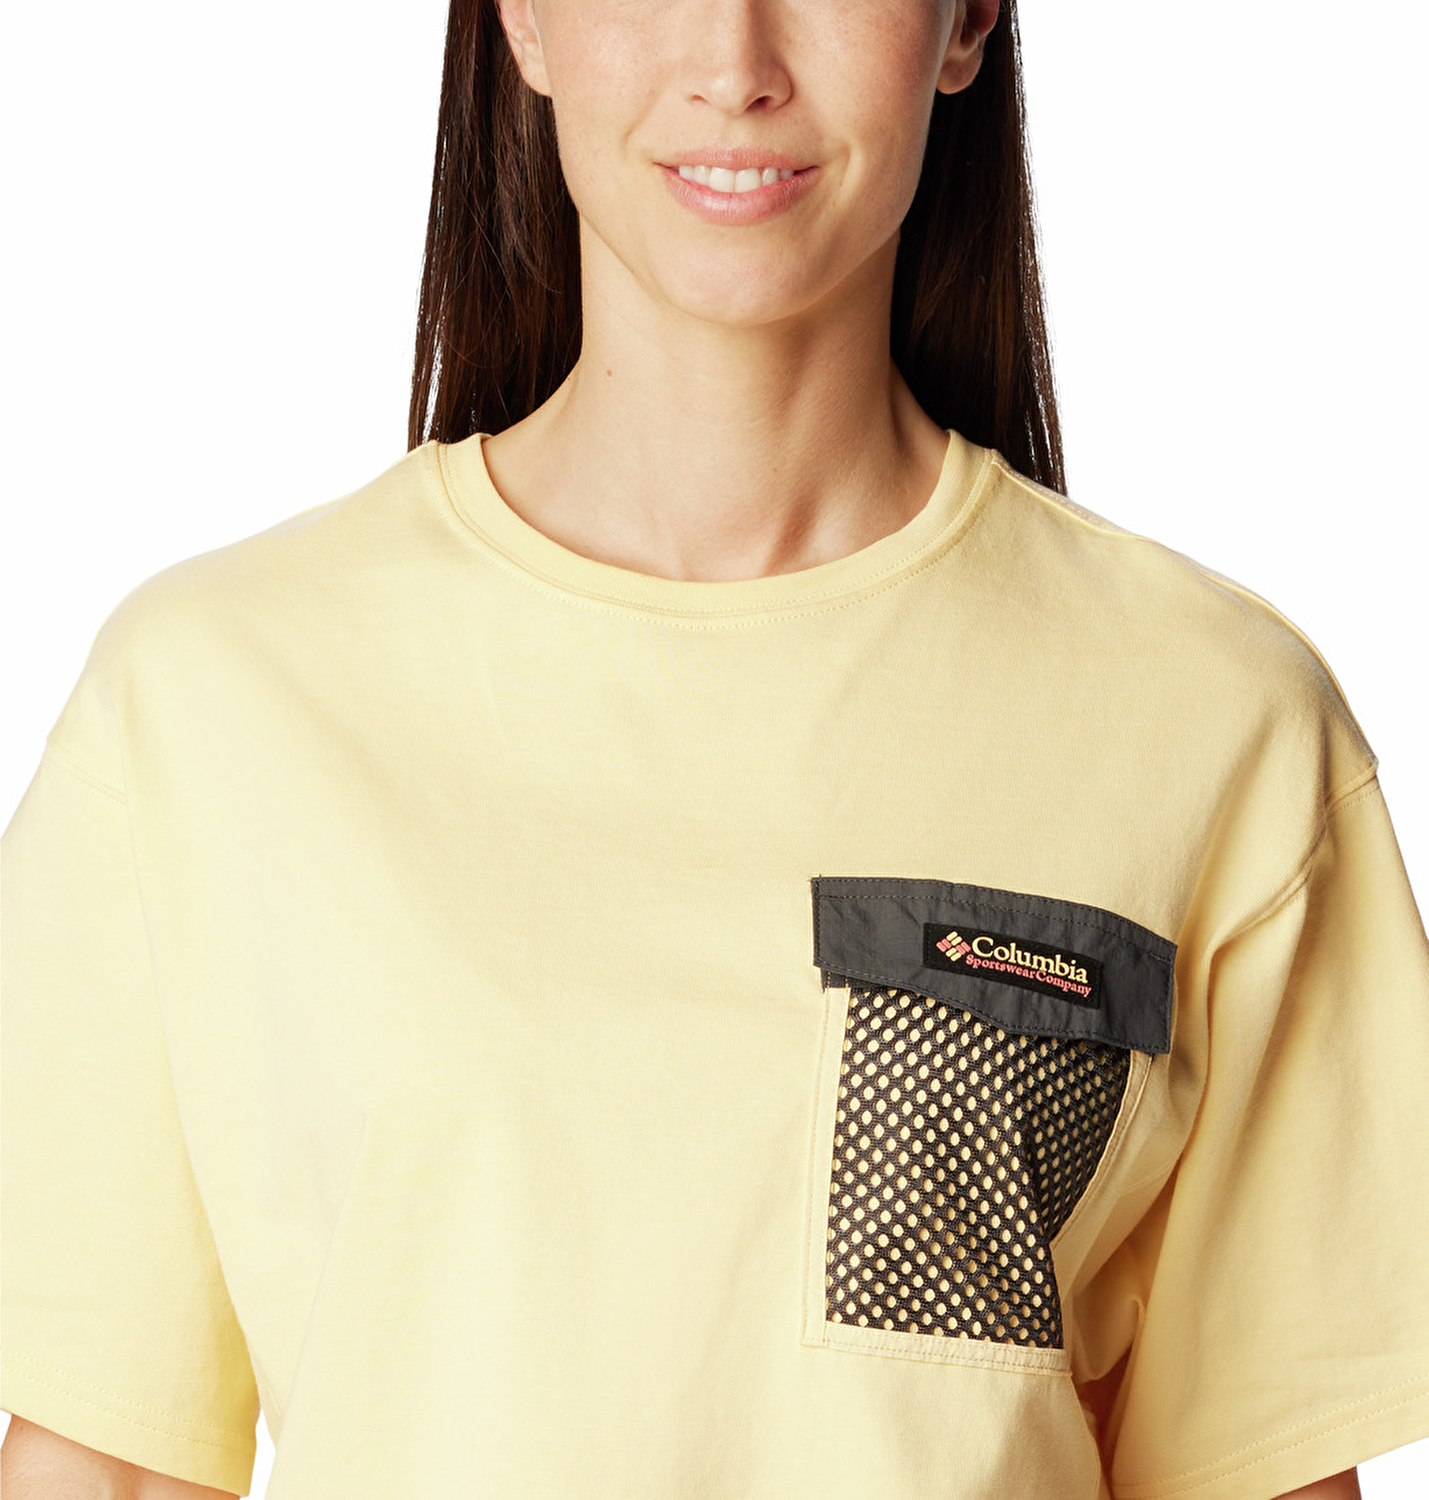 Painted Peak Knit Cropped Top Kadın Kısa Kollu T-Shirt